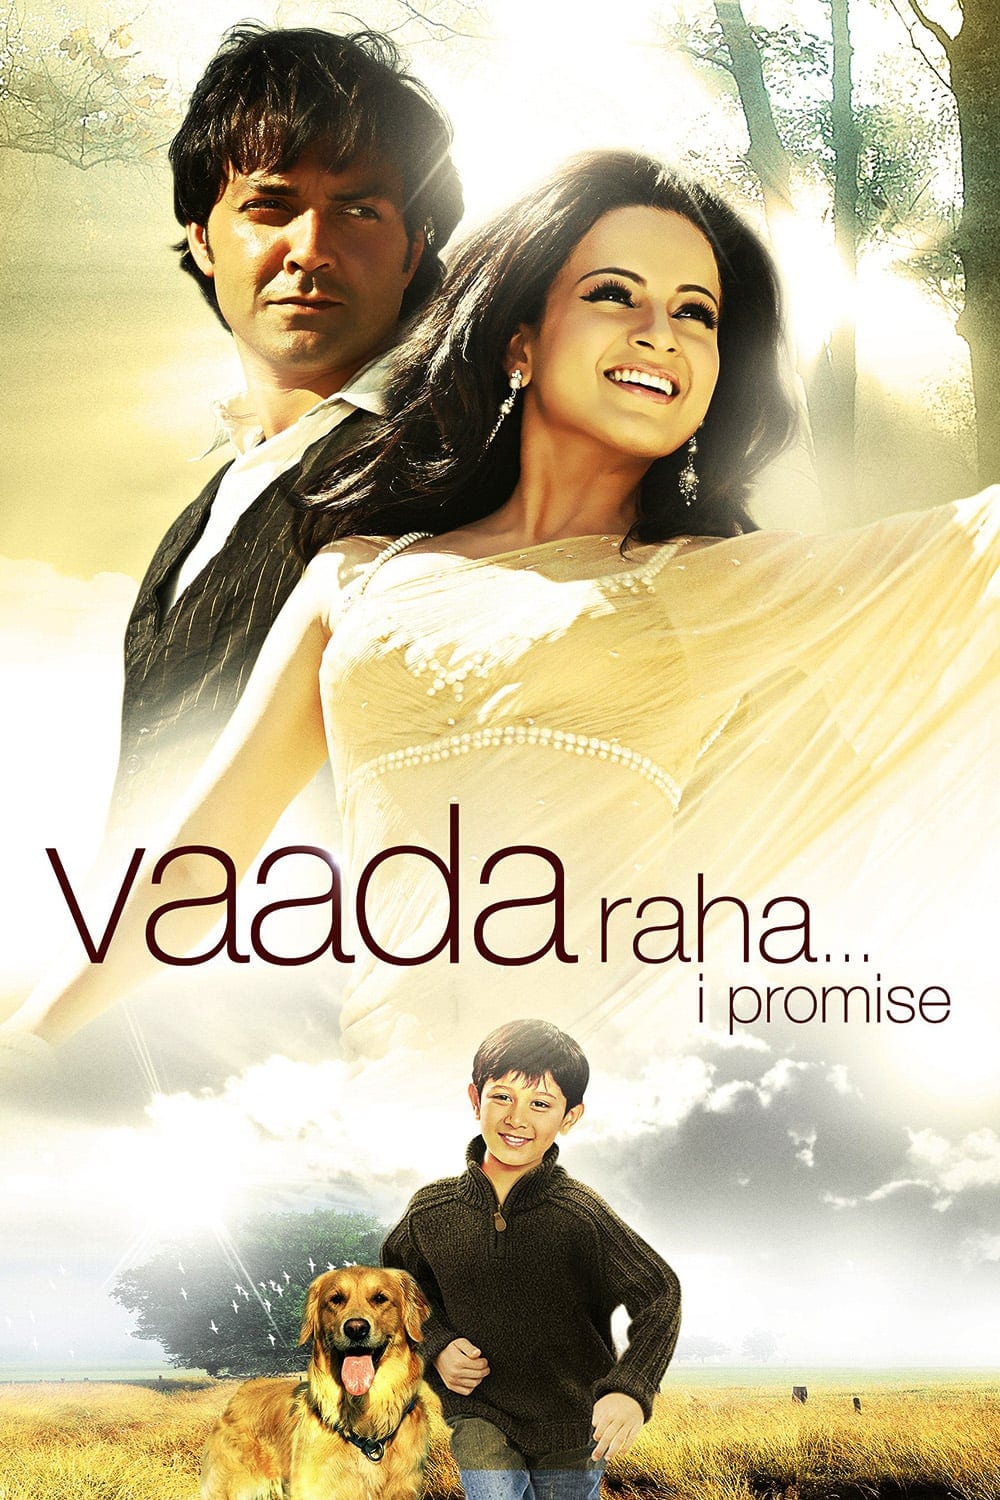 Poster for the movie "Vaada Raha... I Promise"